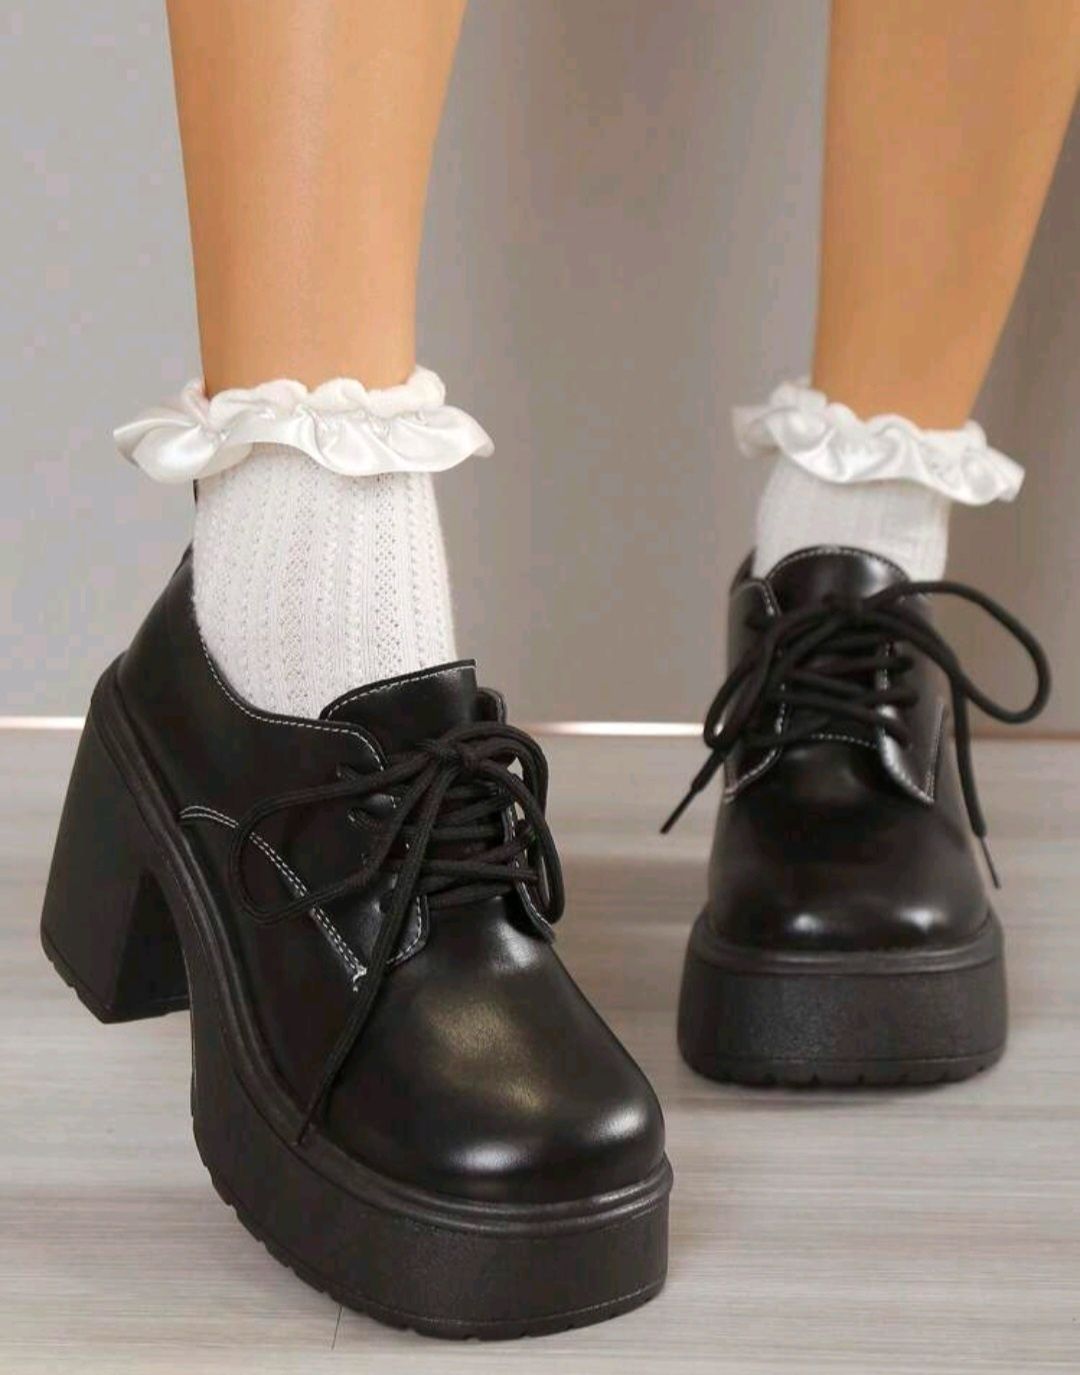 Papuci/Pumps Oxford eleganti pentru femei, pantofi cu toc gros, cu pla